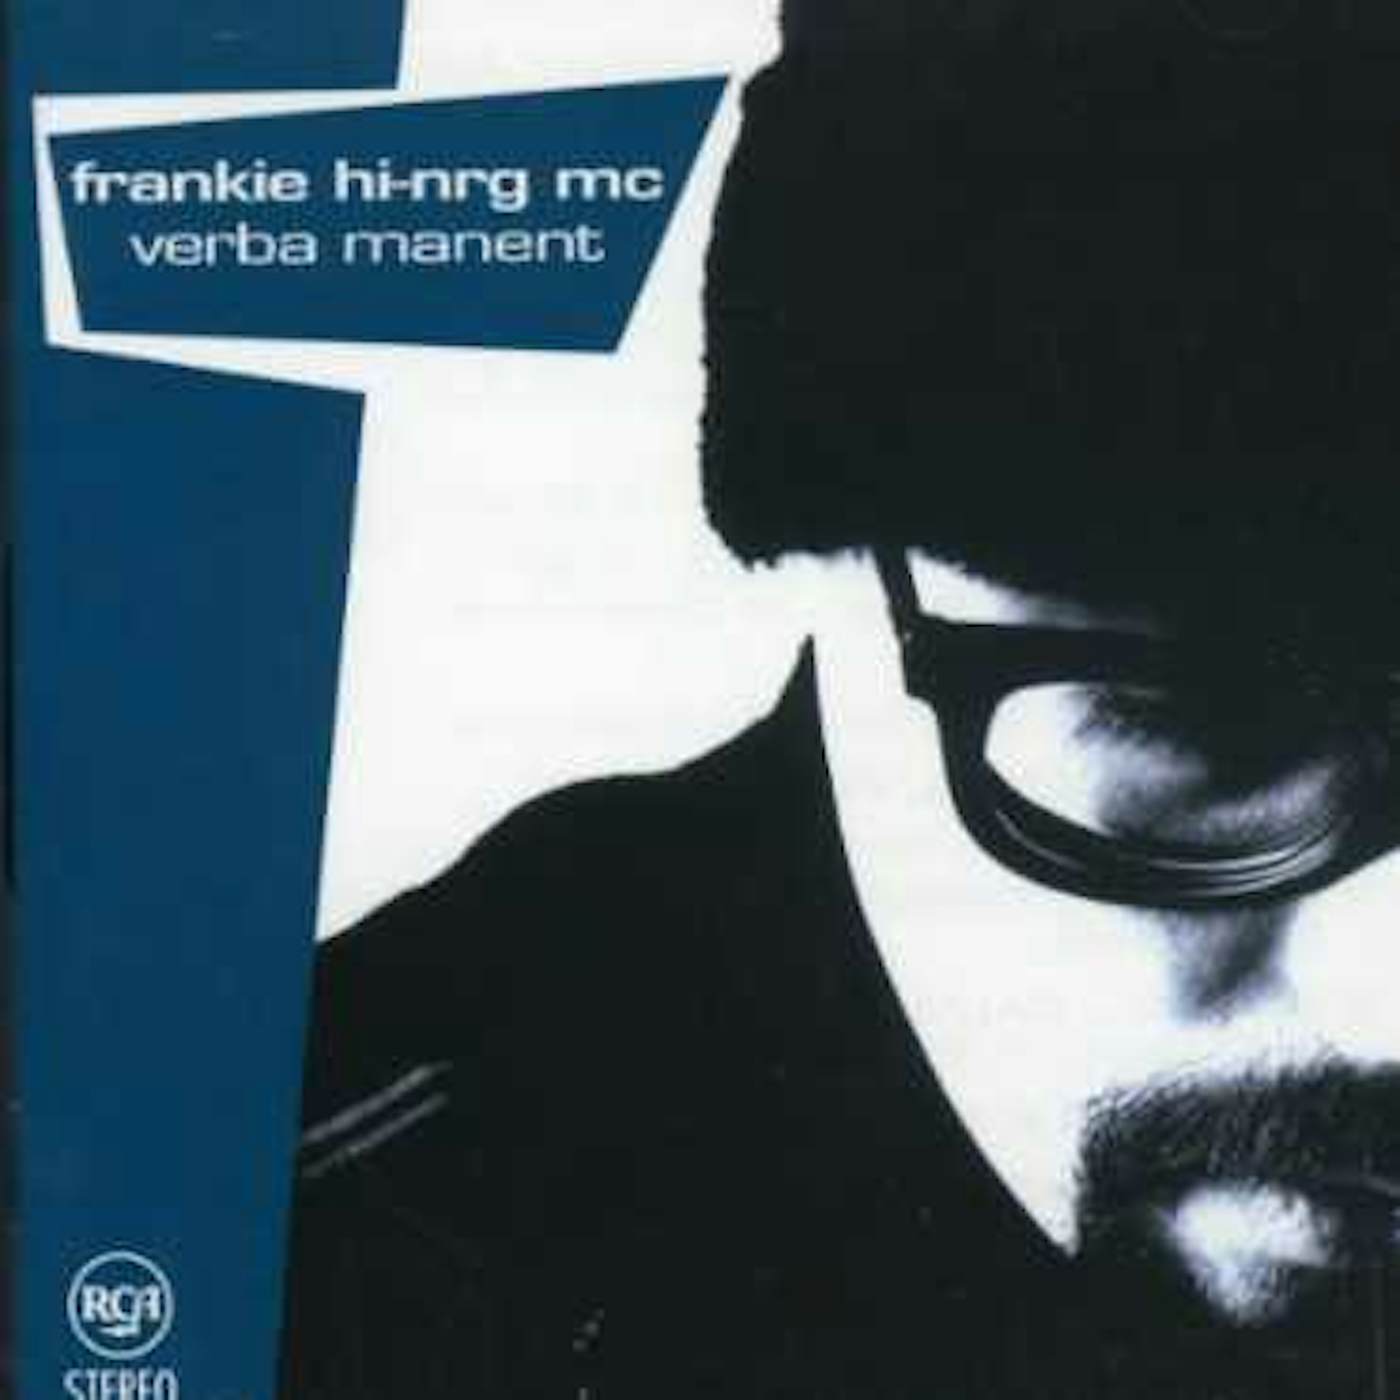 Frankie HI-NRG MC VERBA MANENT (20 VERSIONE) CD